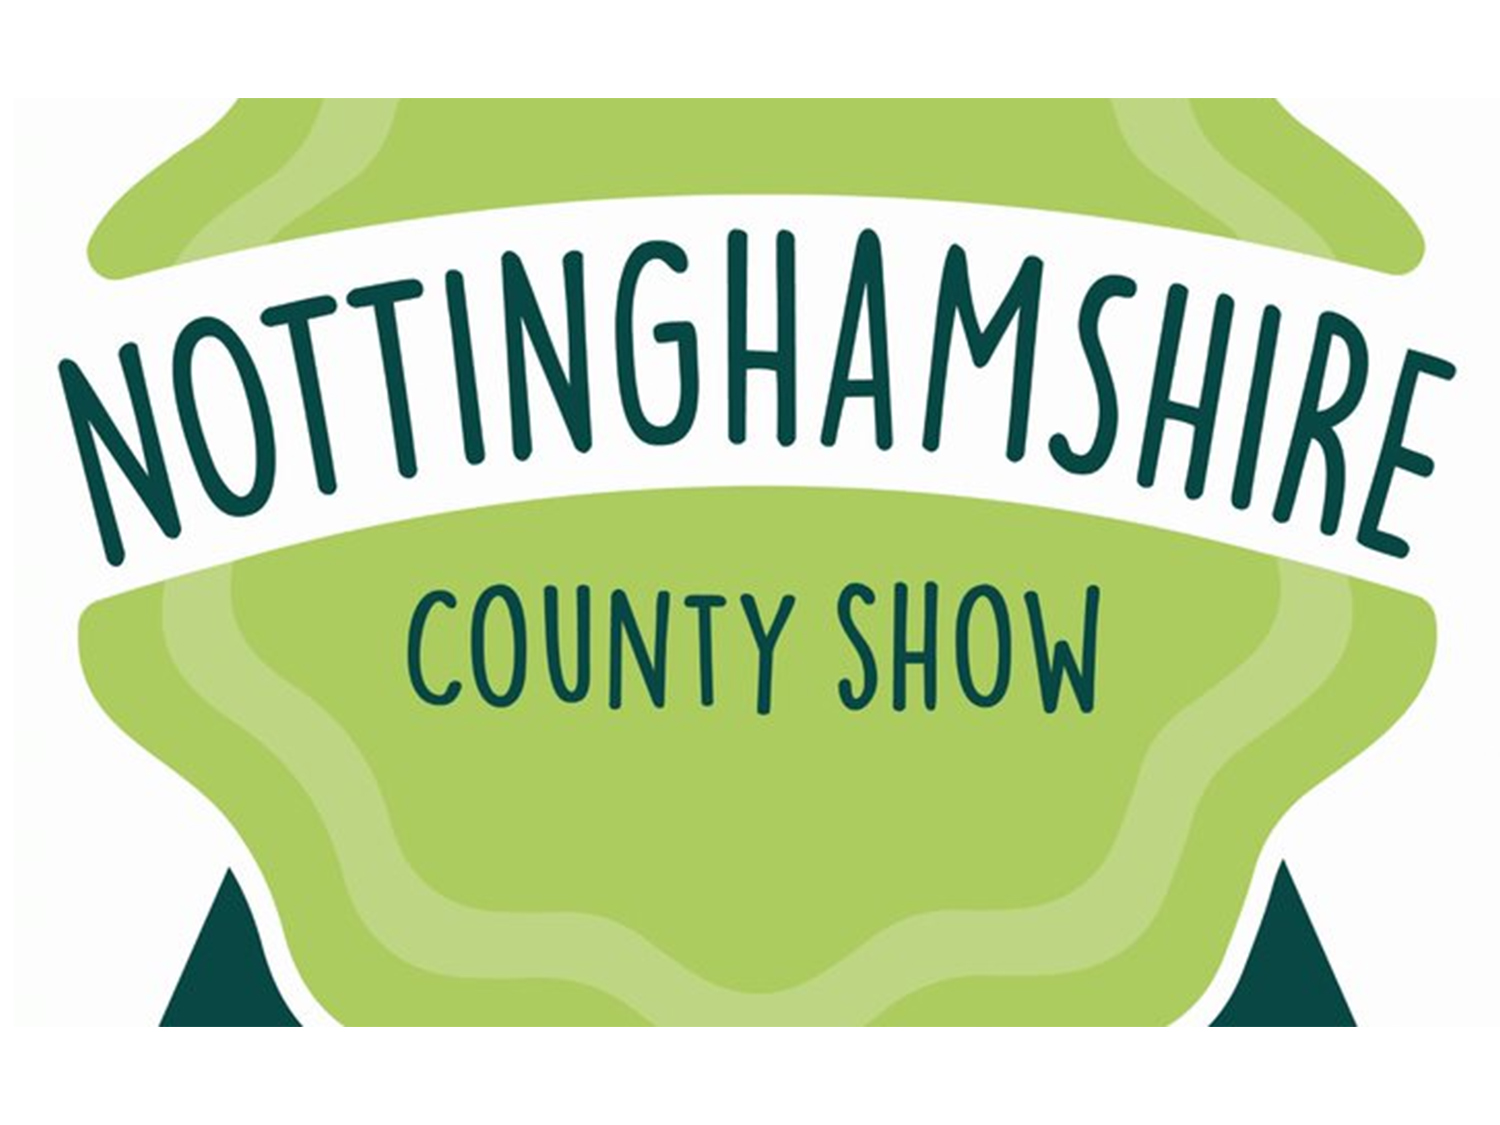 Nottinghamshire County Show logo